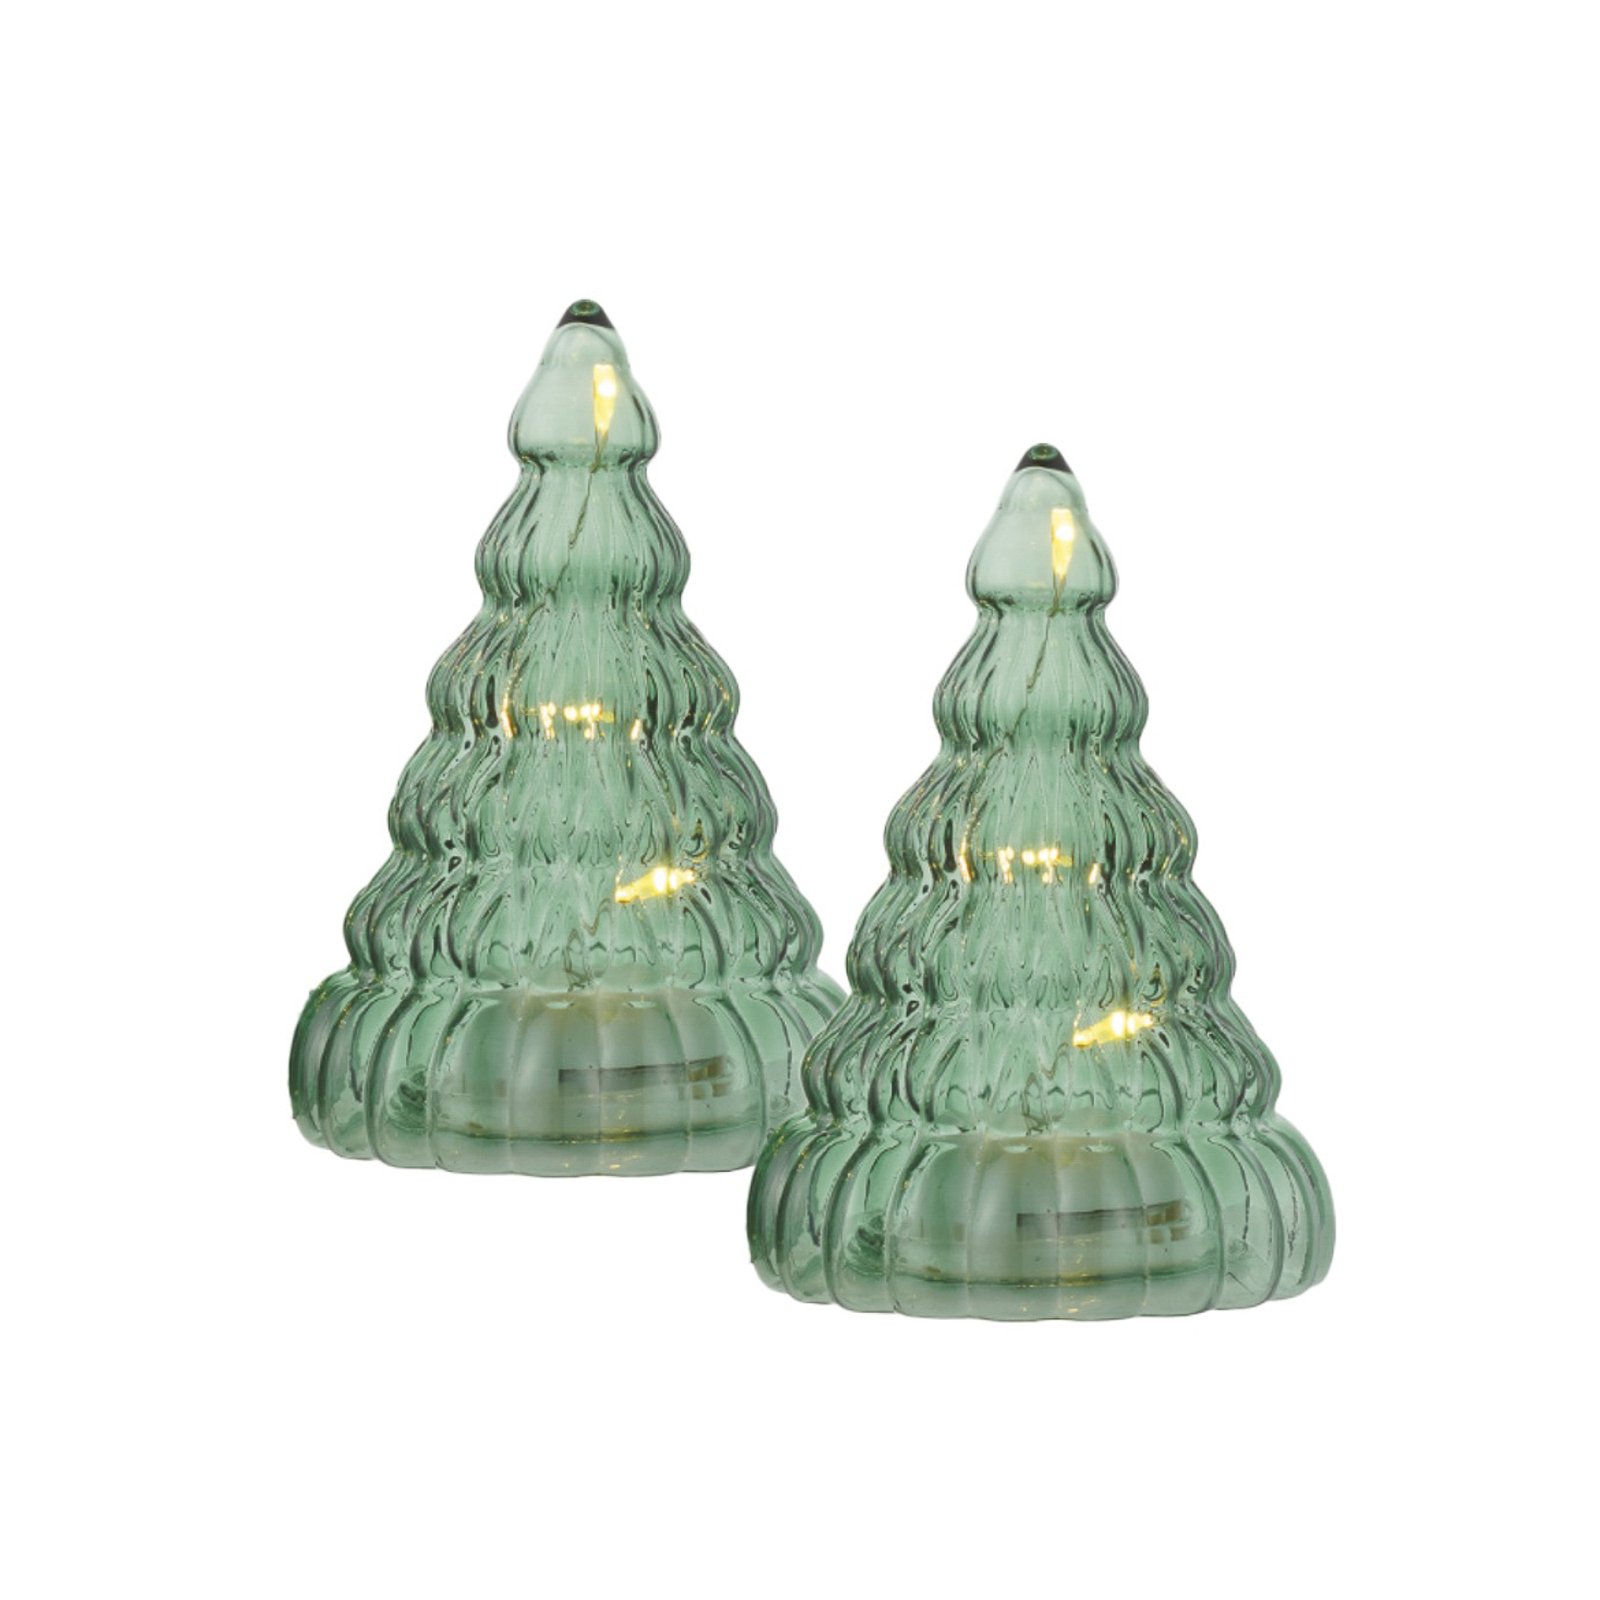 Lucy LED decorative figure glass tree green 9cm 2x